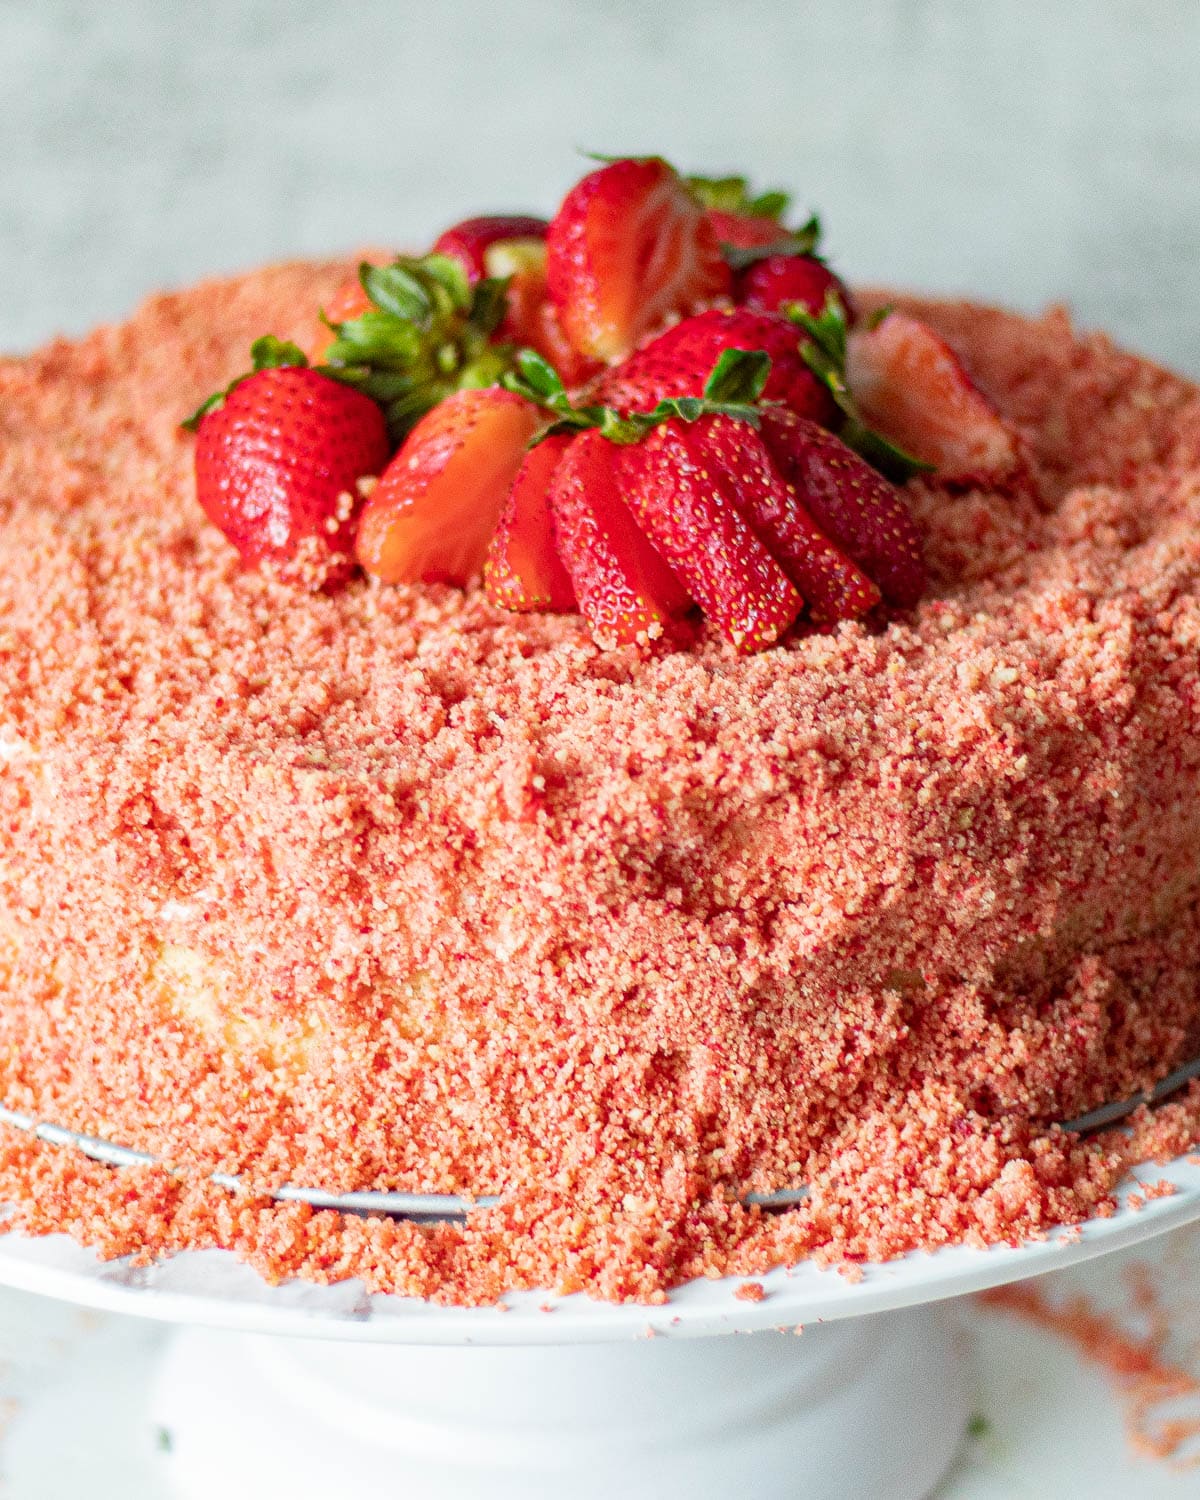 strawberry crunch cheesecake - no bake recipe on a cake stand